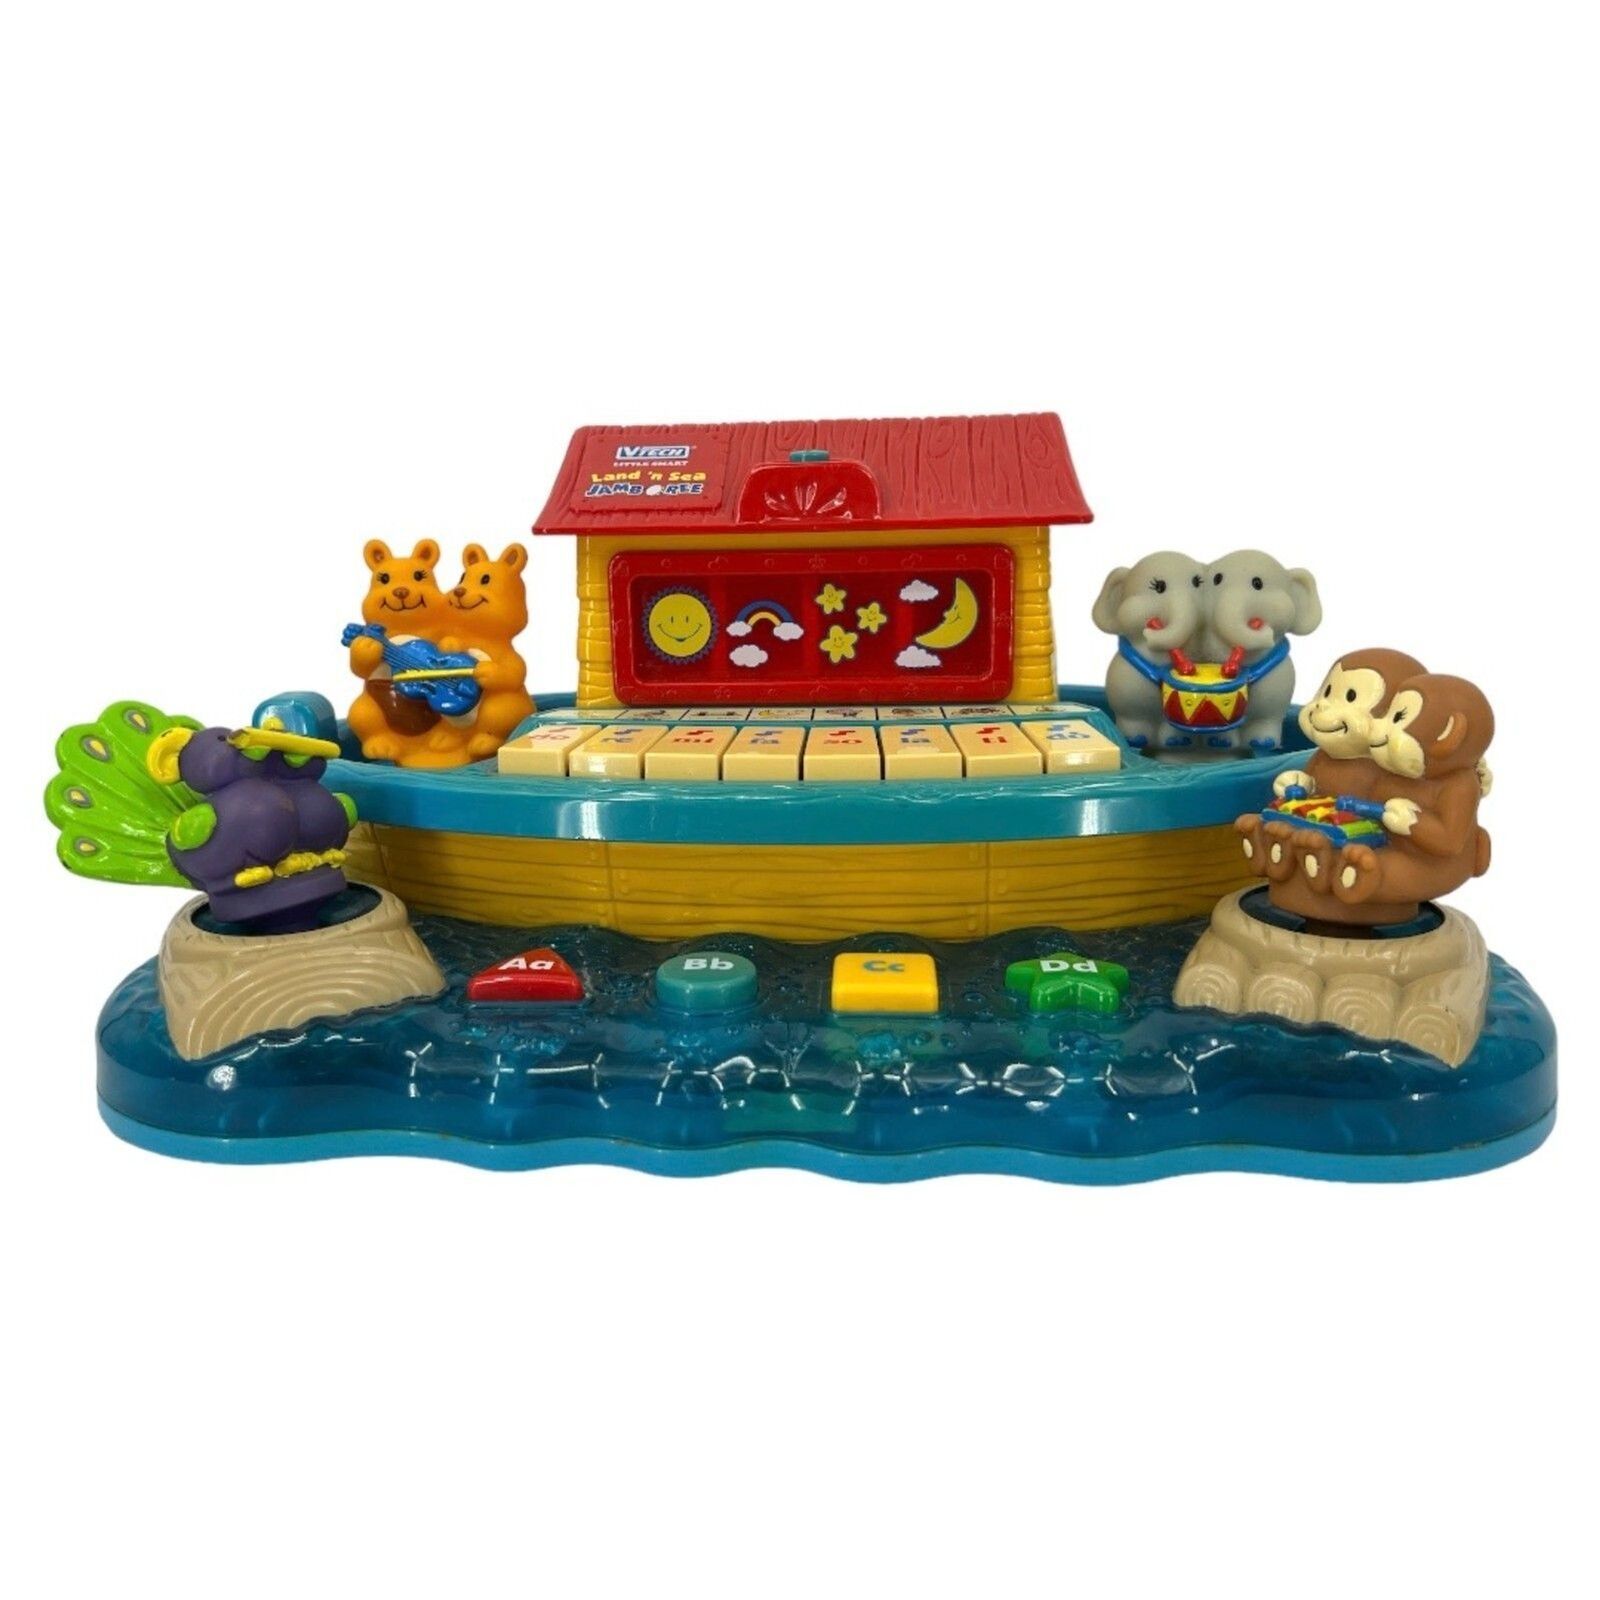 Vtech Little Smart Land 'N Sea Jamboree toy VTG 97 music piano learning baby - $29.70